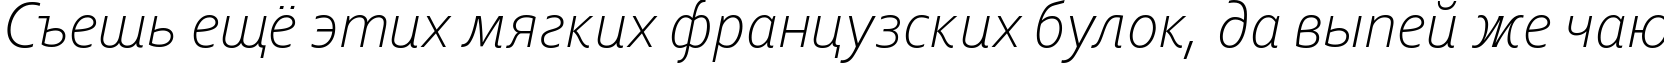 Пример написания шрифтом Corbel Light Italic текста на русском